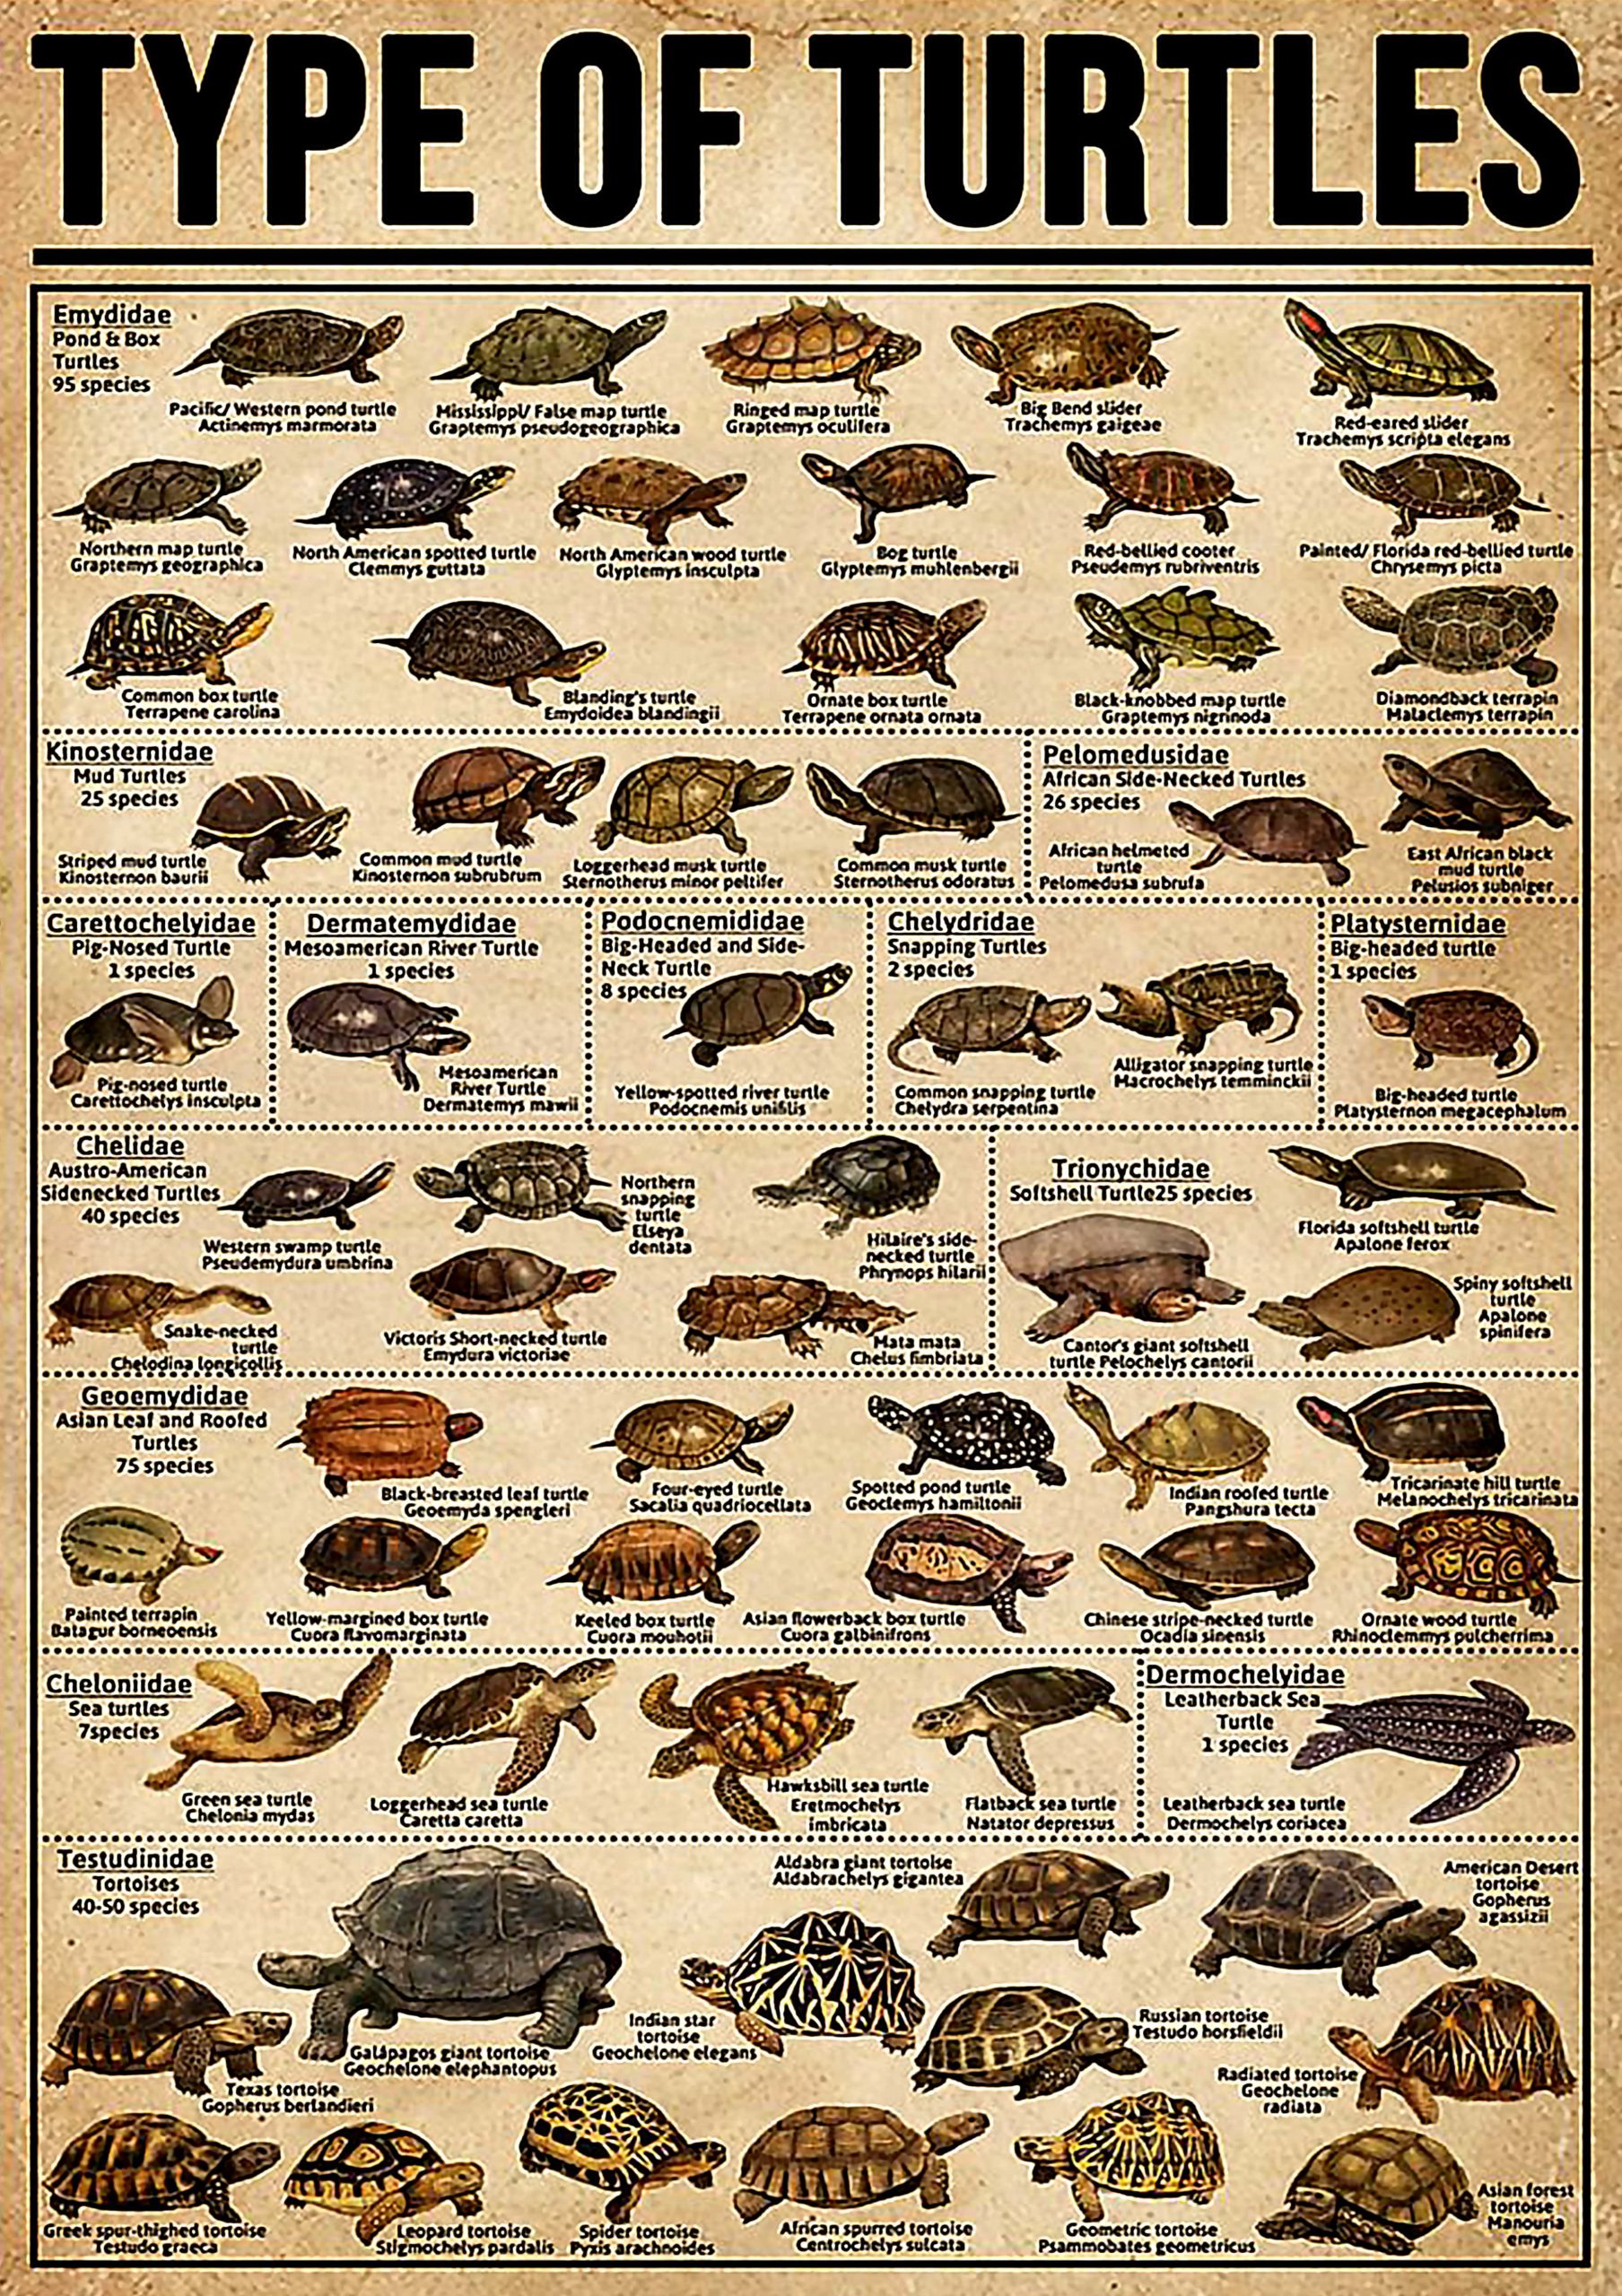 vintage type of turtles poster 1 - Copy (3)